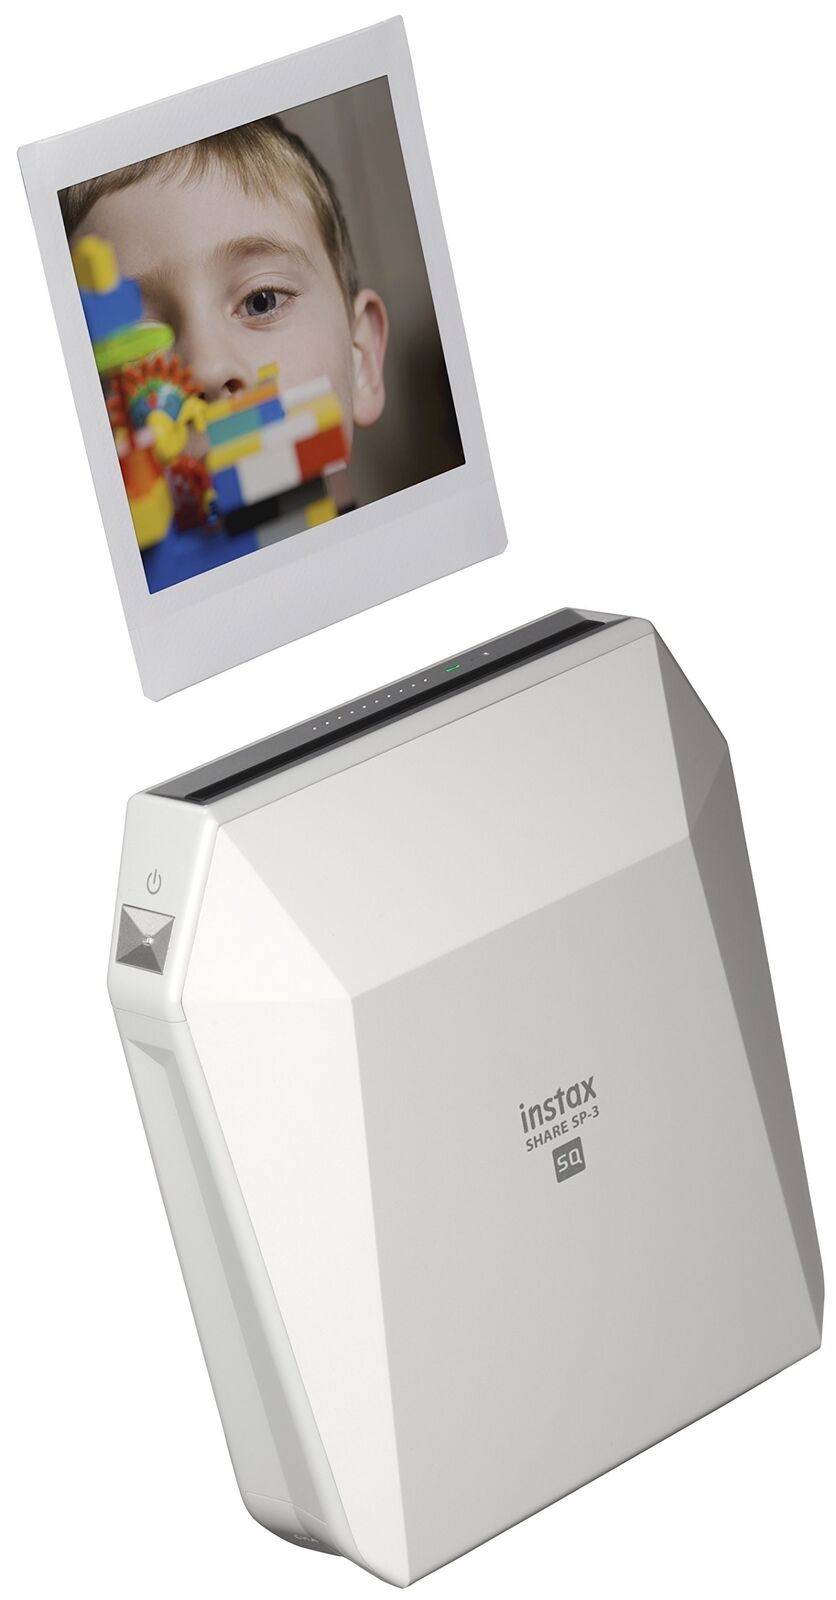 SP-3 Fujifilm Instax Share SP-3 White Portable Mobile Printer White Japan [New]